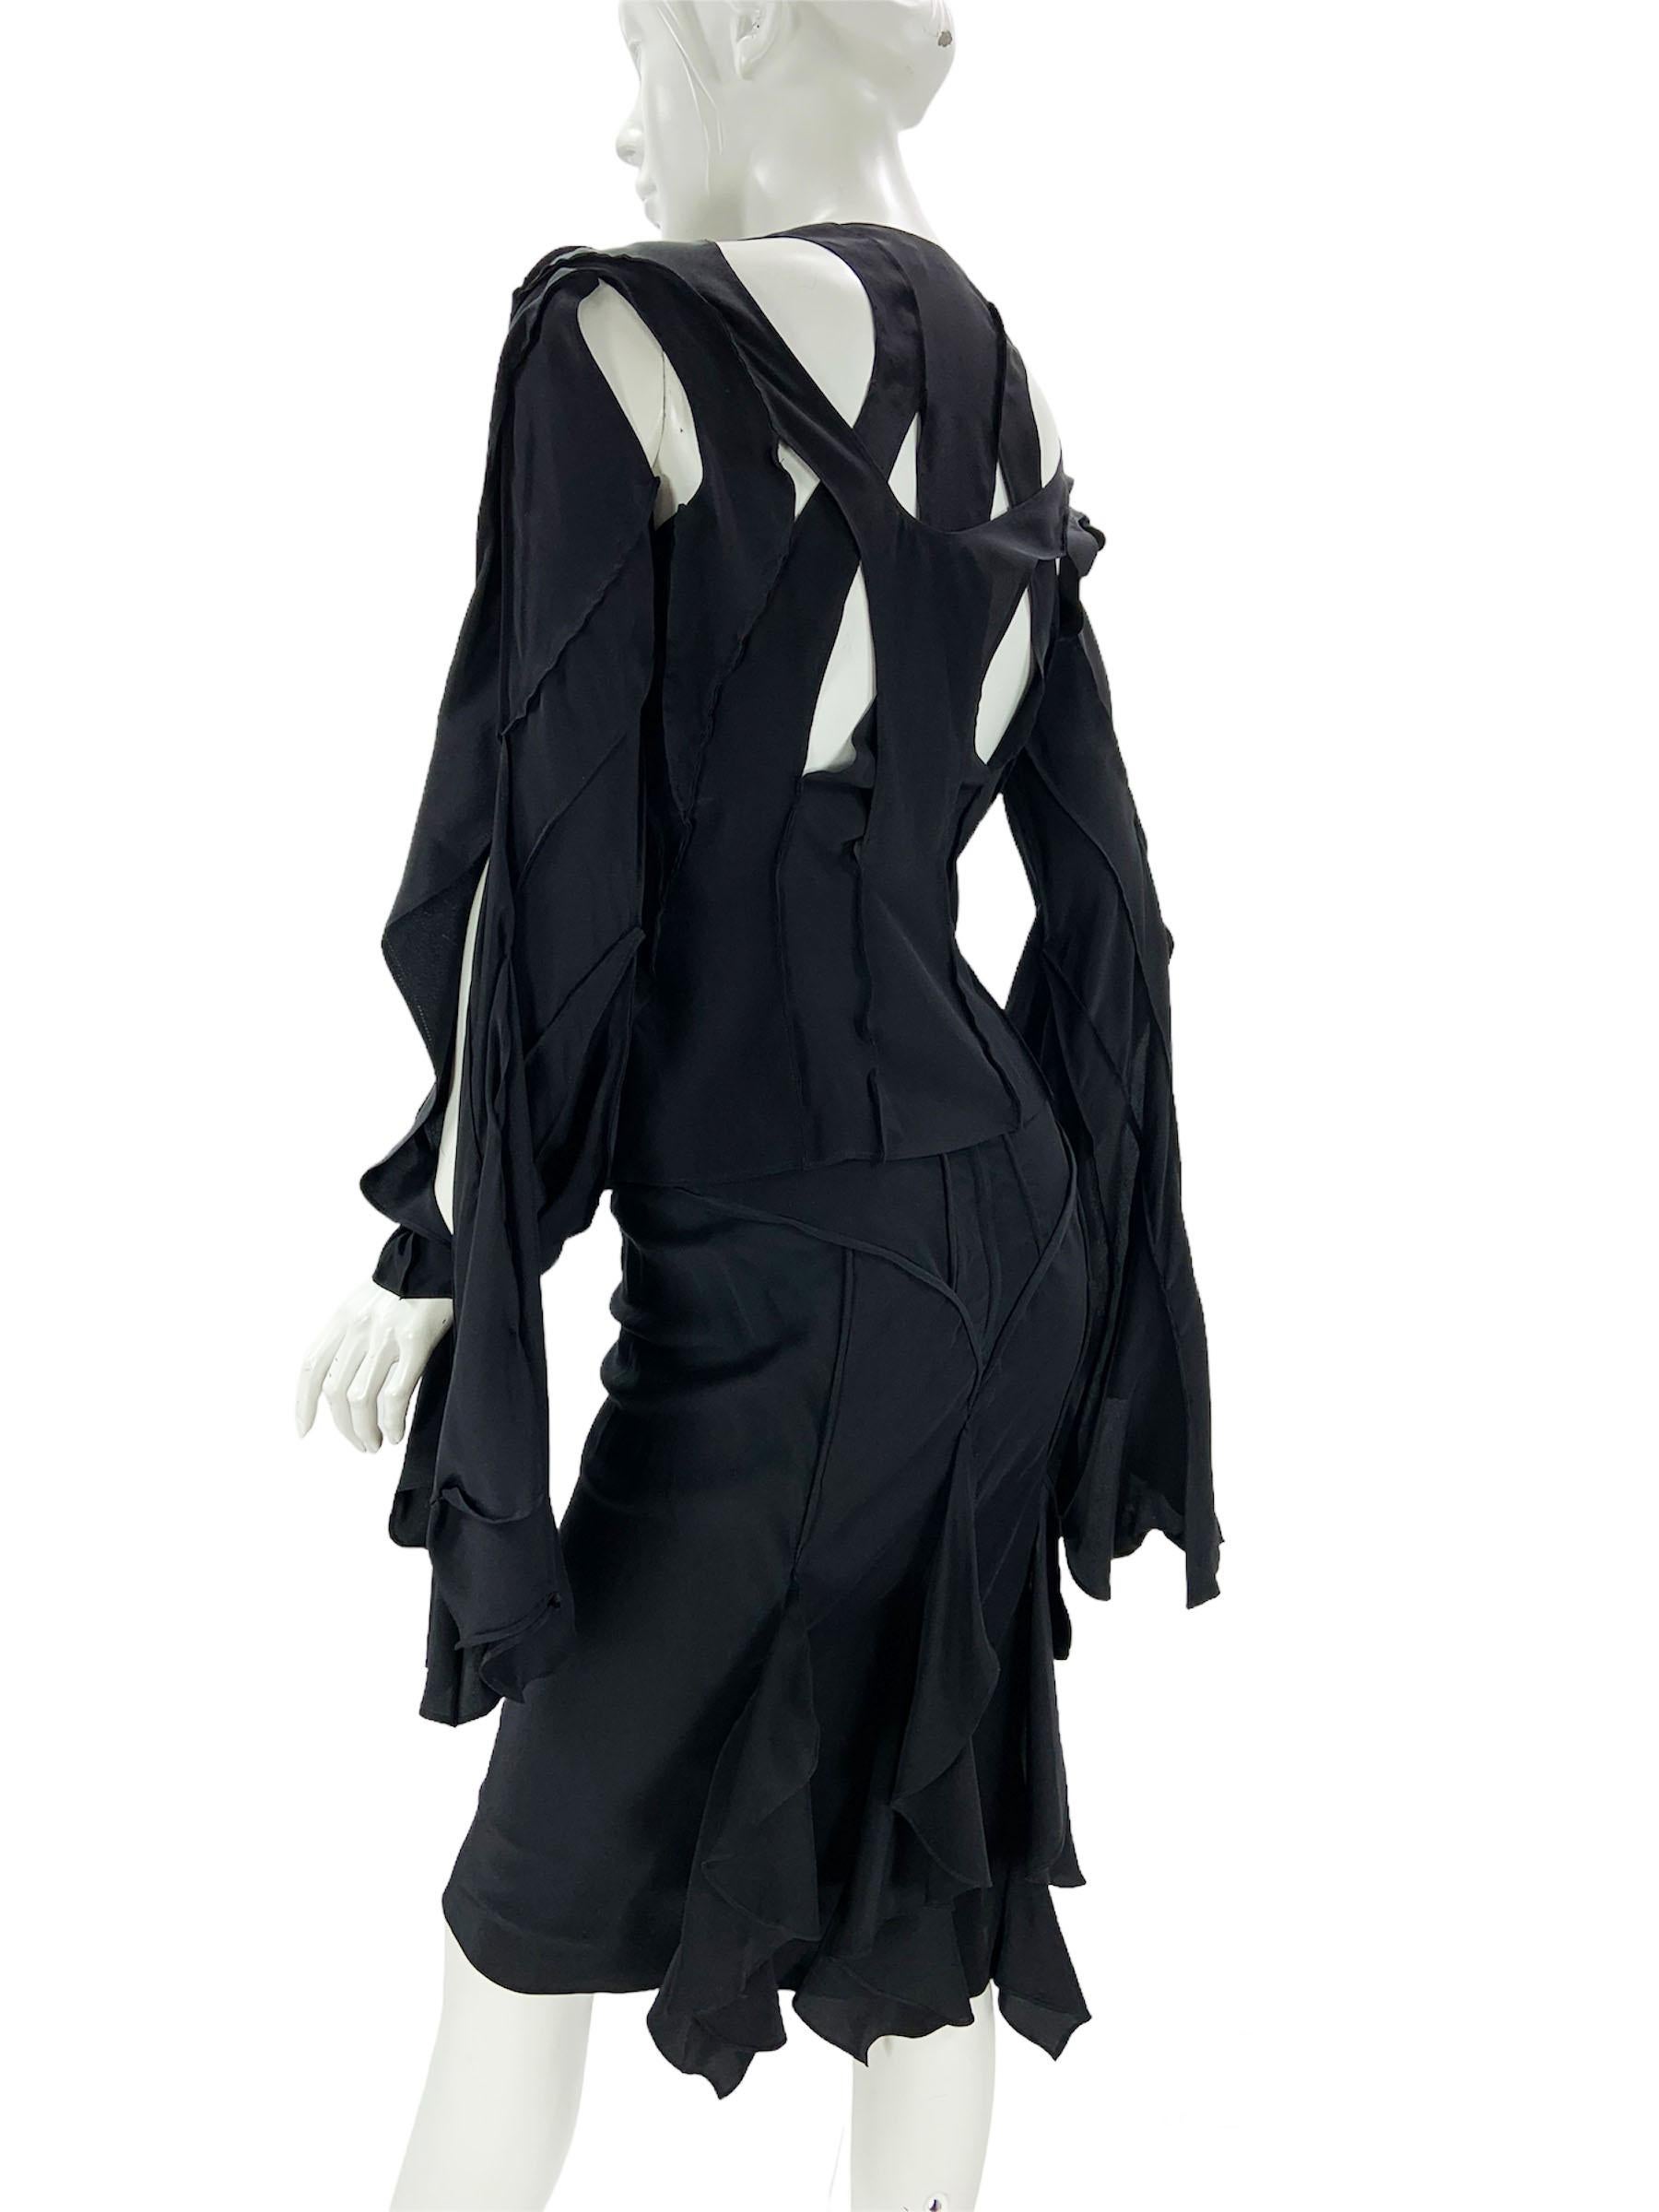 Tom Ford for Yves Saint Laurent S/S 2003 Silk Black Skirt Suit French 38 - US 6 For Sale 1